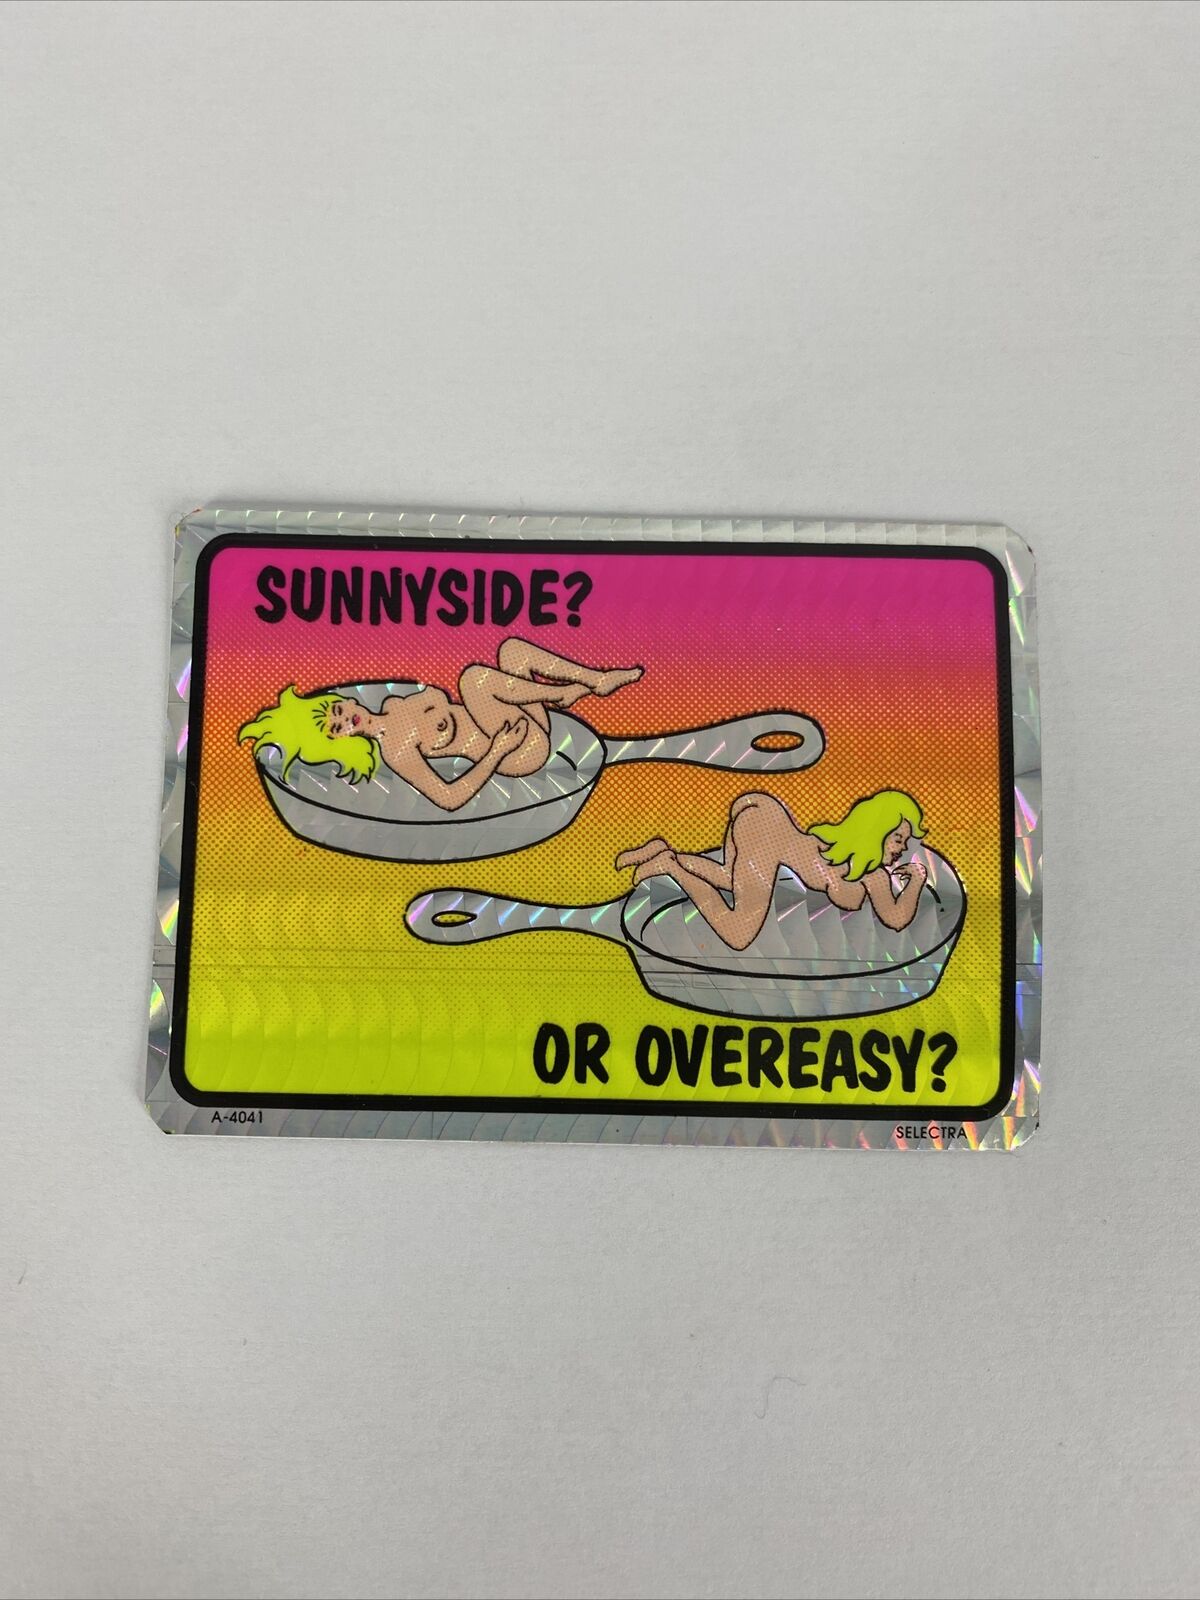 Adult Humor RARE Vintage Sunnyside? Or Overeasy? Prism Vending Machine Sticker